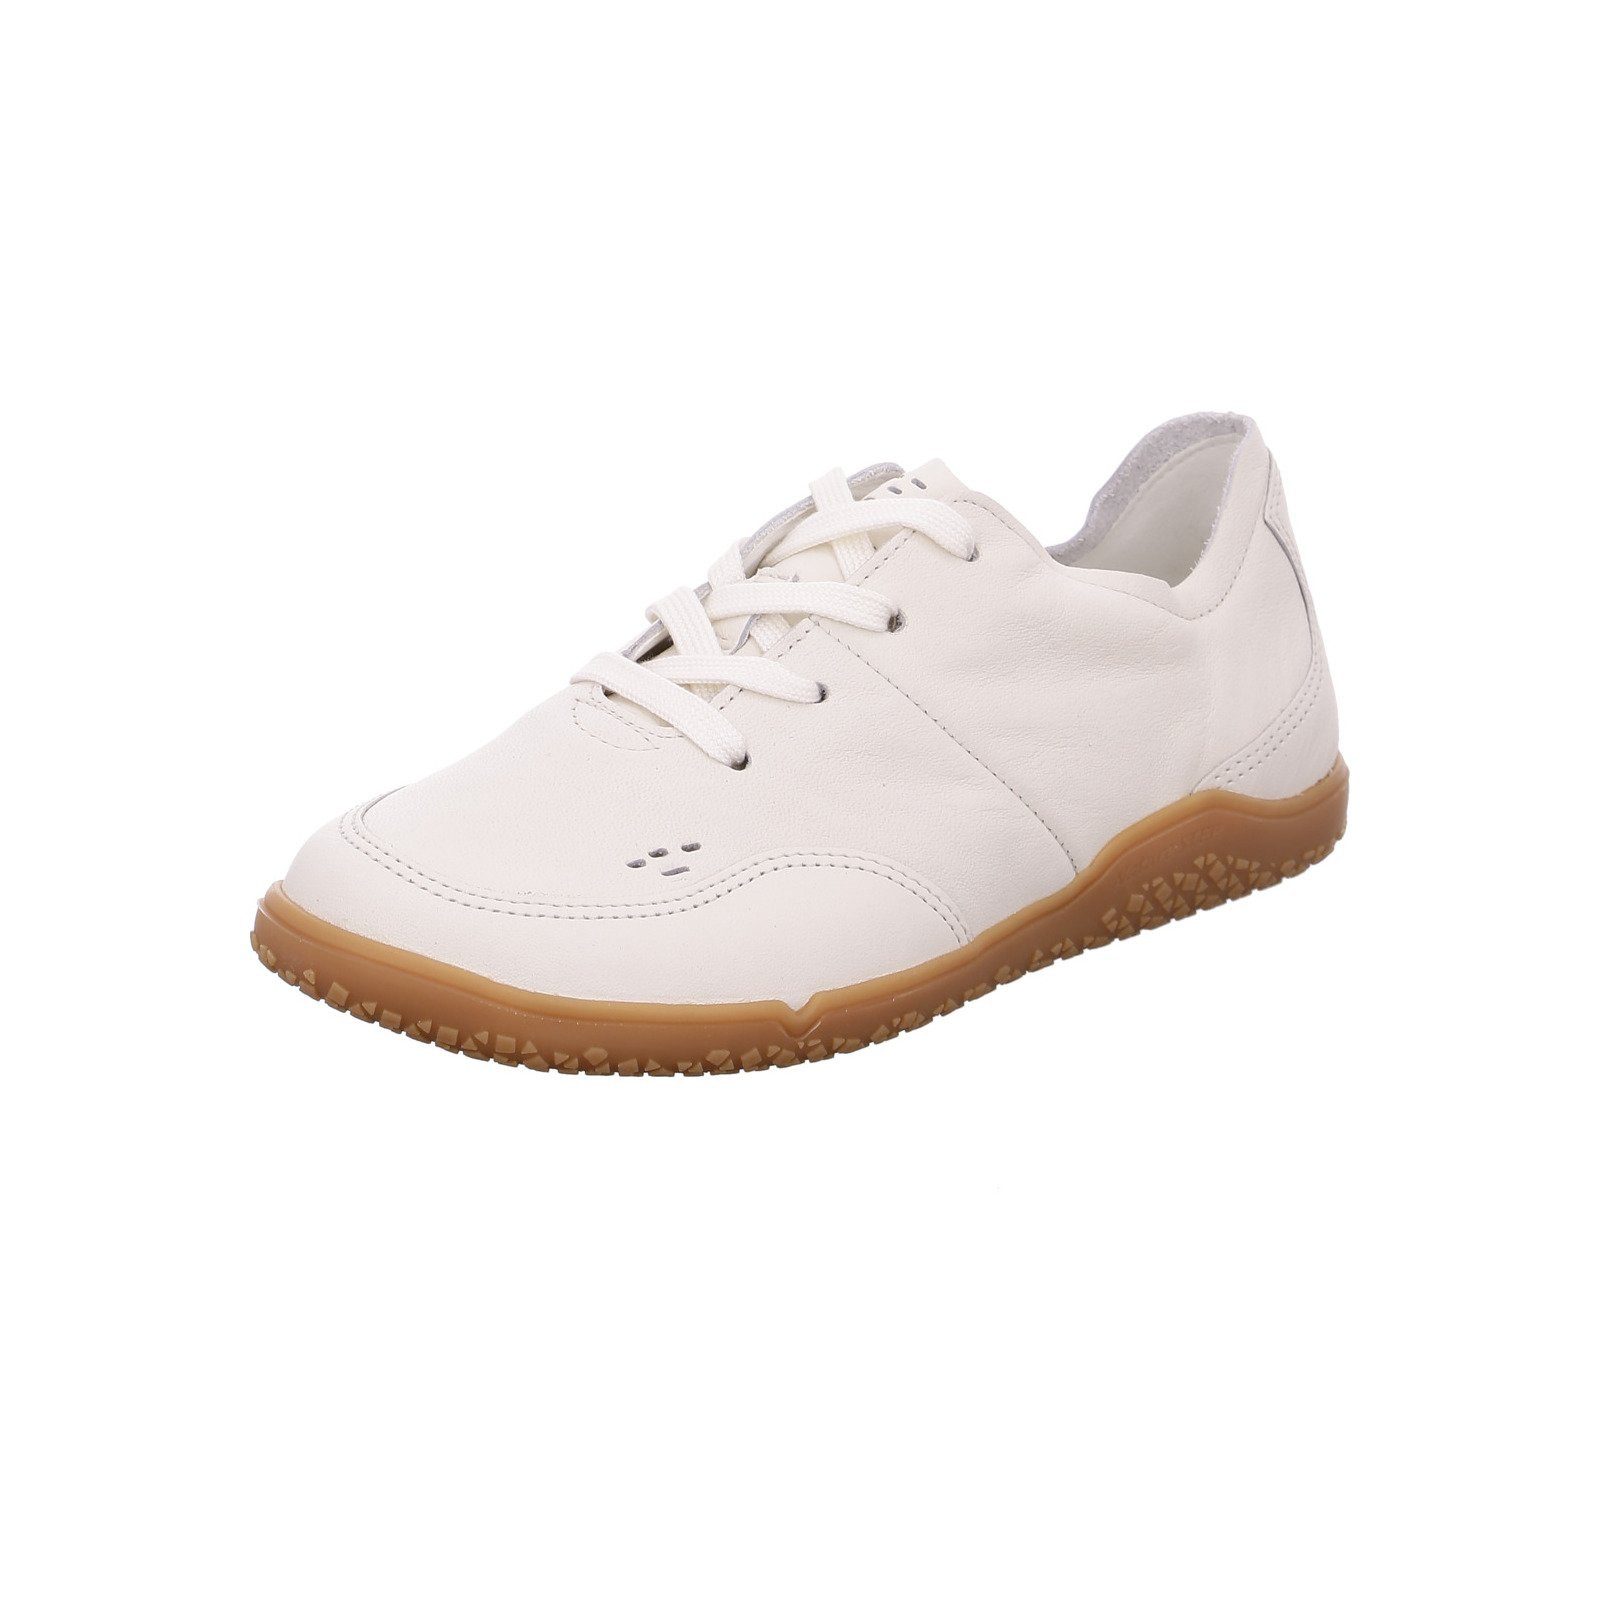 Ara Nature - Damen Schuhe Schnürschuh weiß